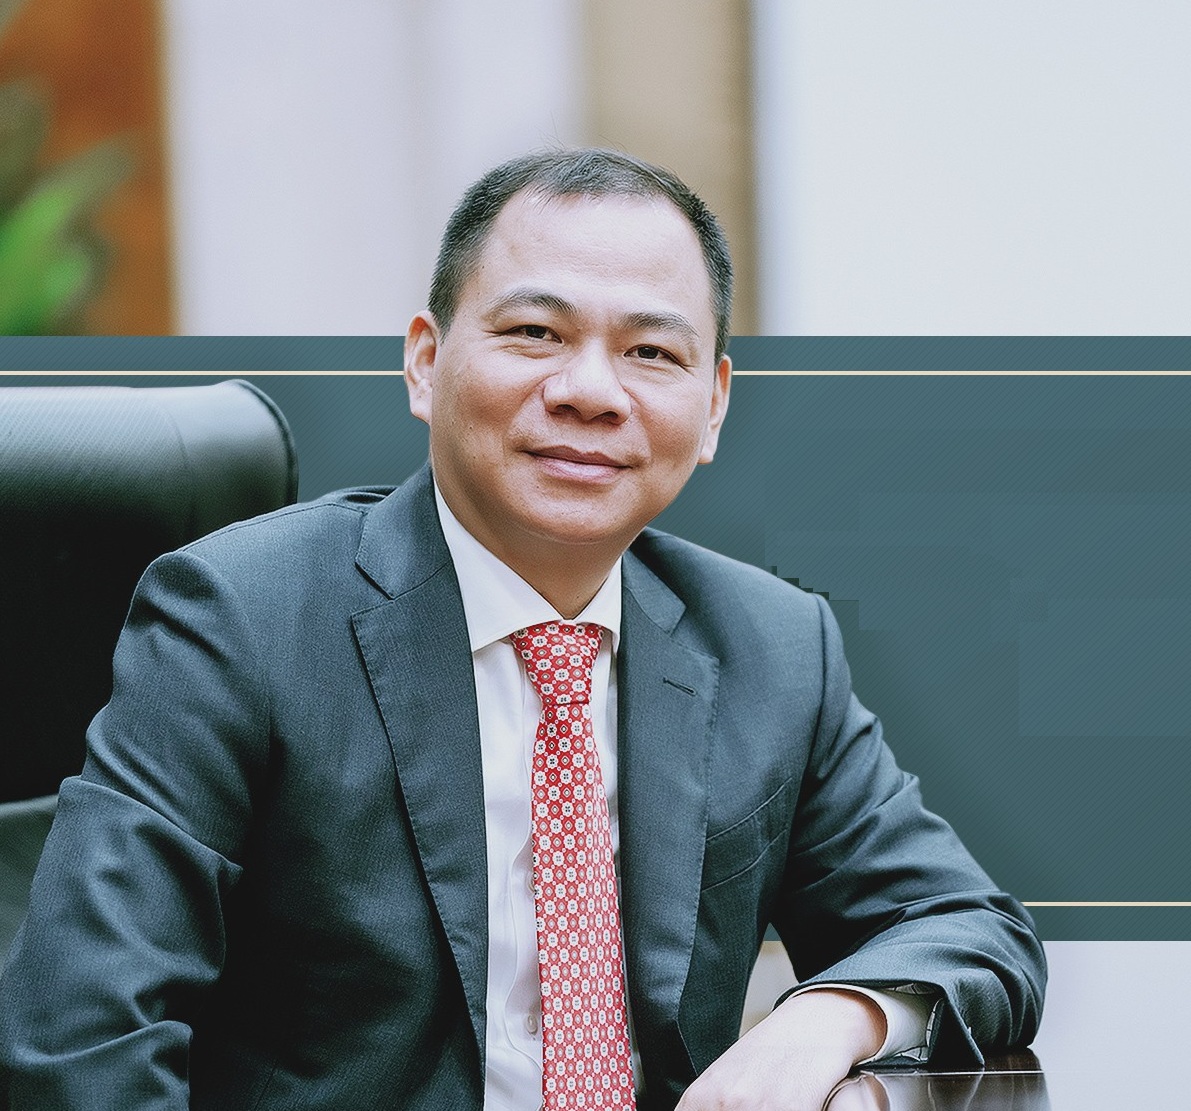 Conversations with Vietnamese billionaire Pham Nhat Vuong - Part 1